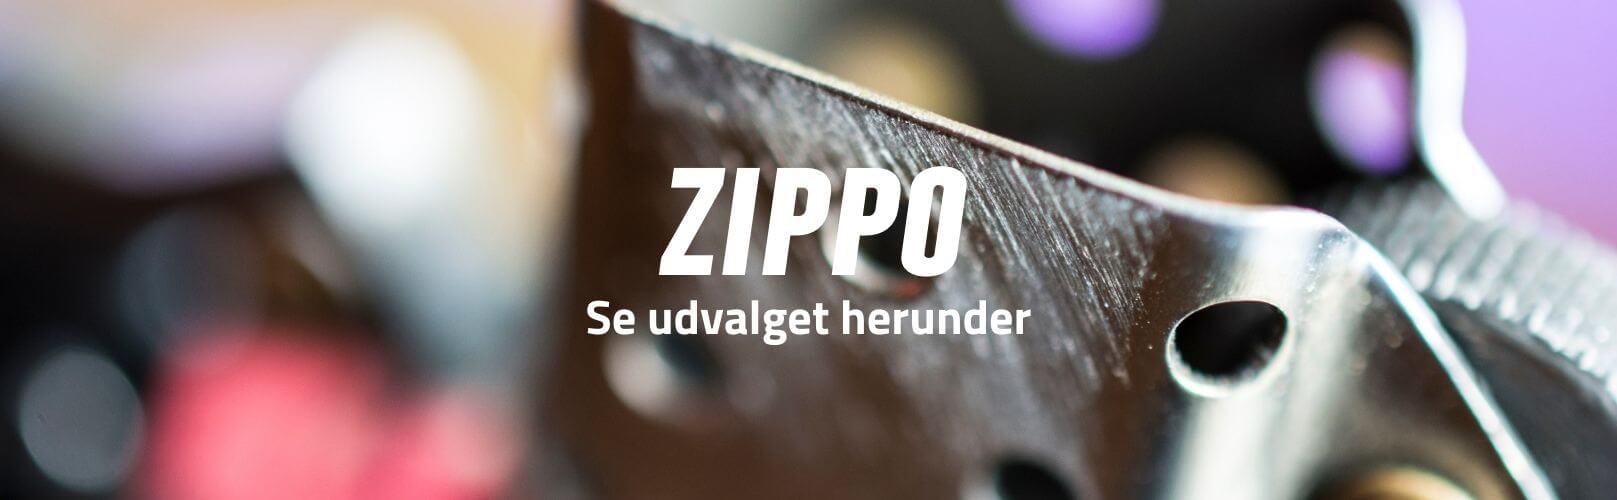 Zippo brand banner